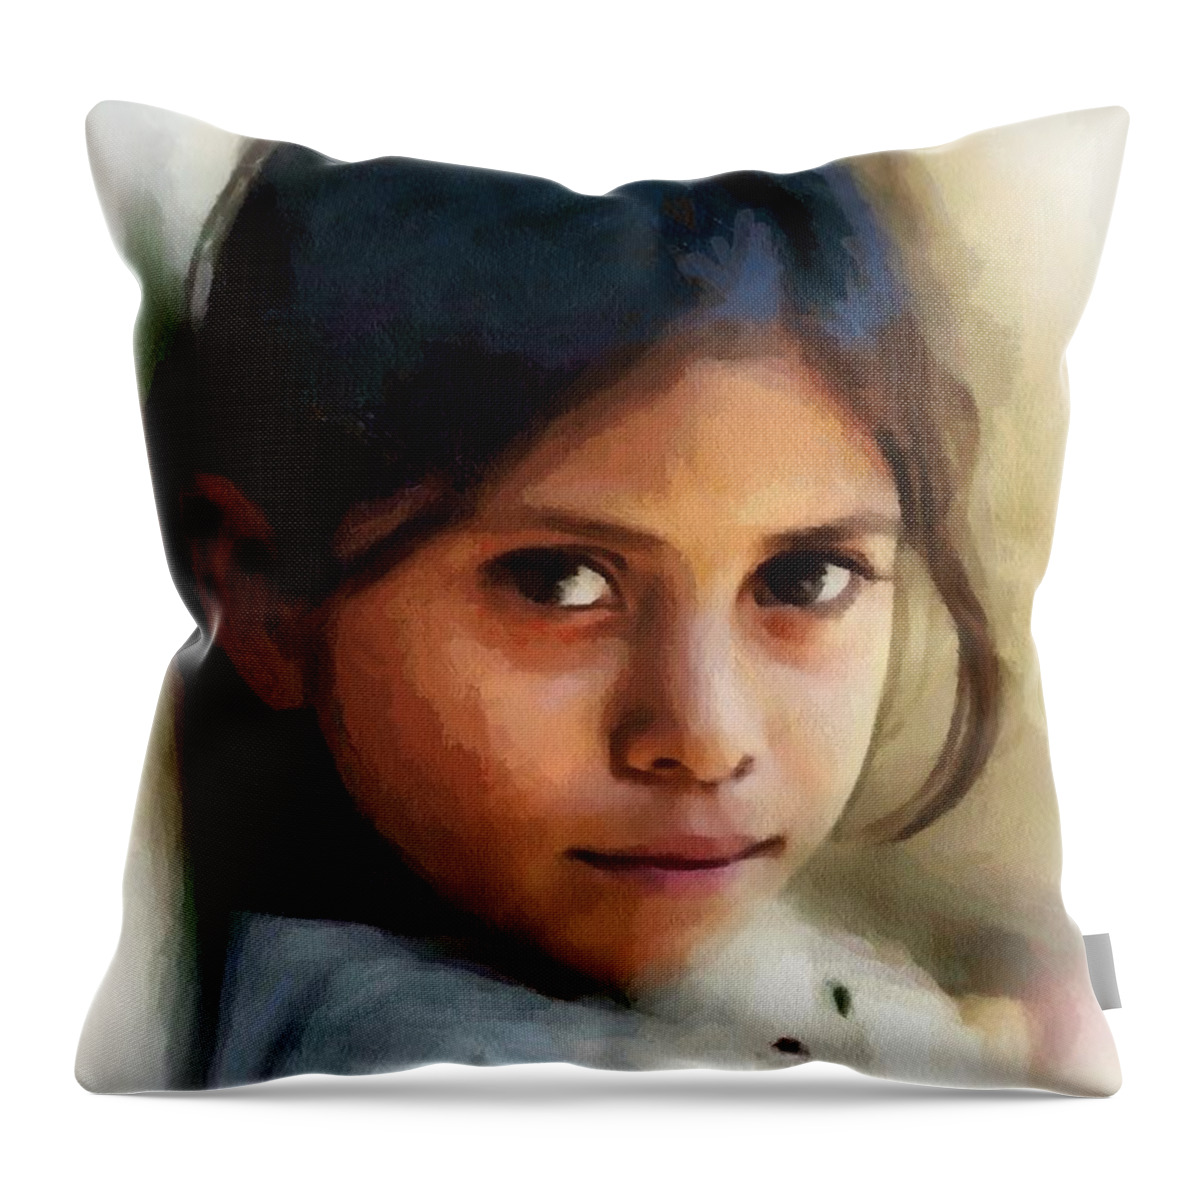 Child Throw Pillow featuring the digital art Those eyes #2 by Gun Legler